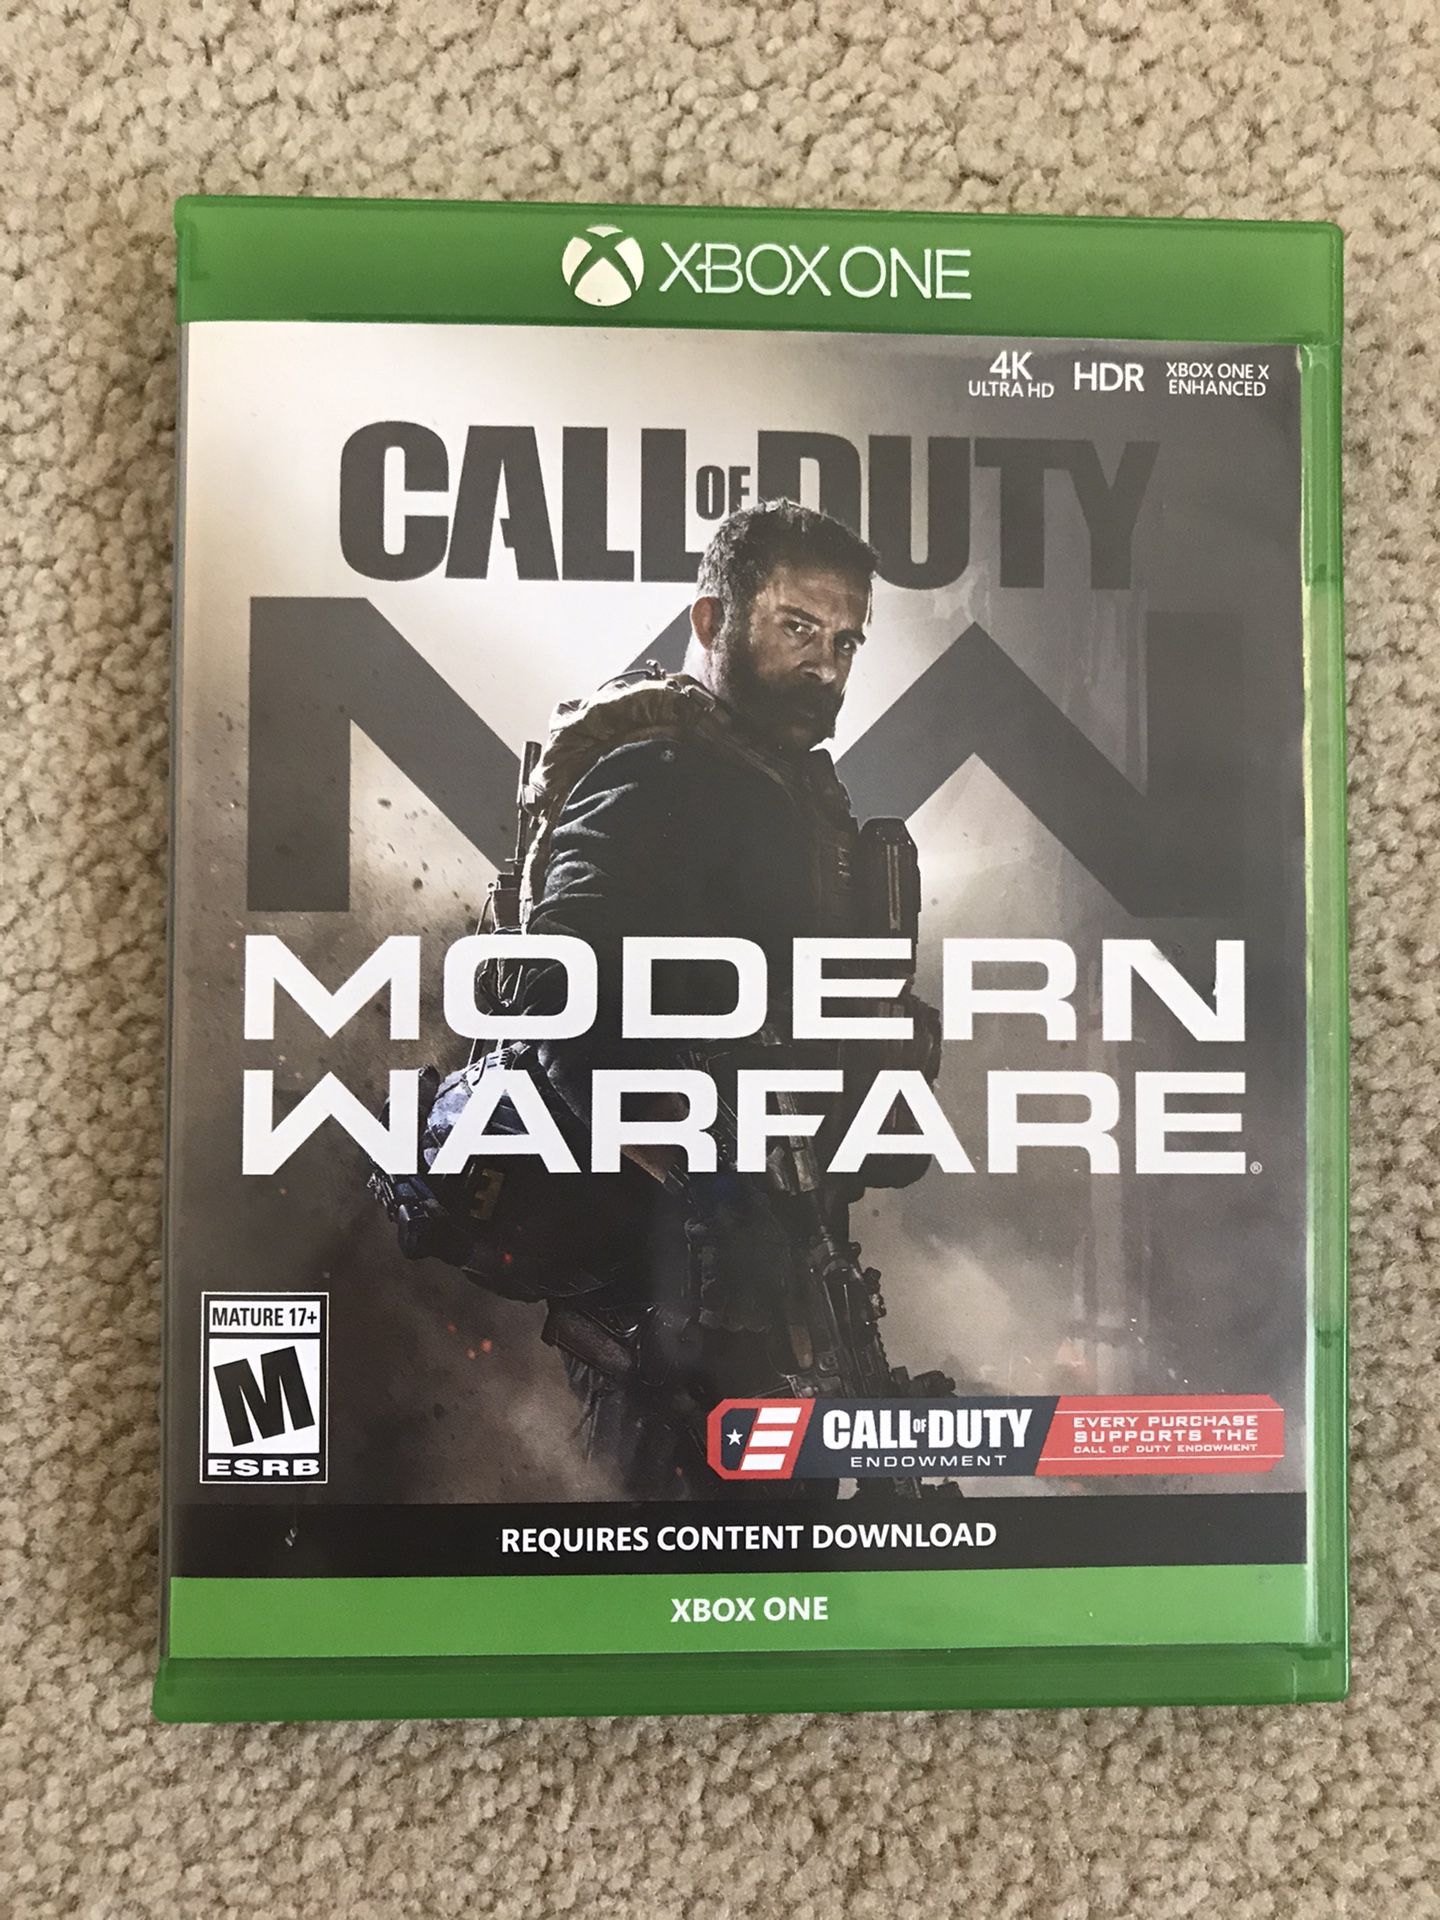 Xbox one game call of duty modern warfare